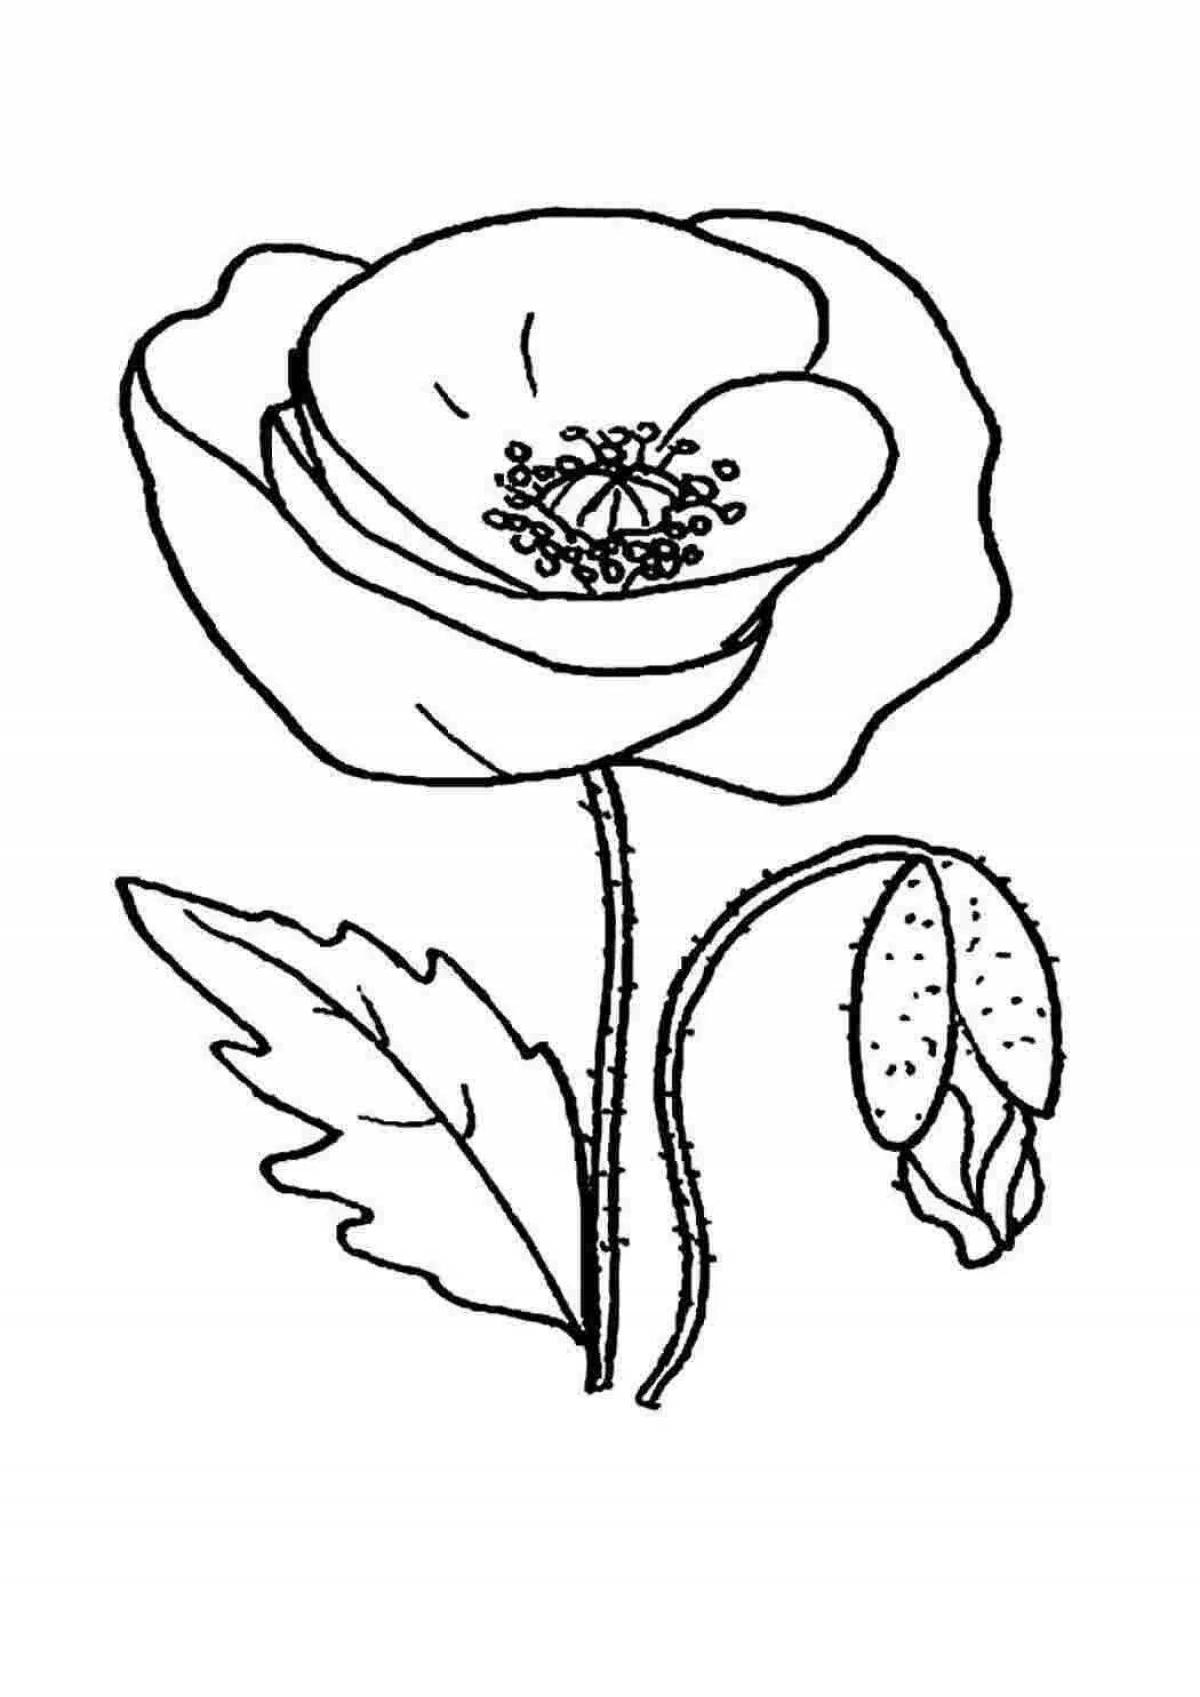 Coloring page joyful poppy flower